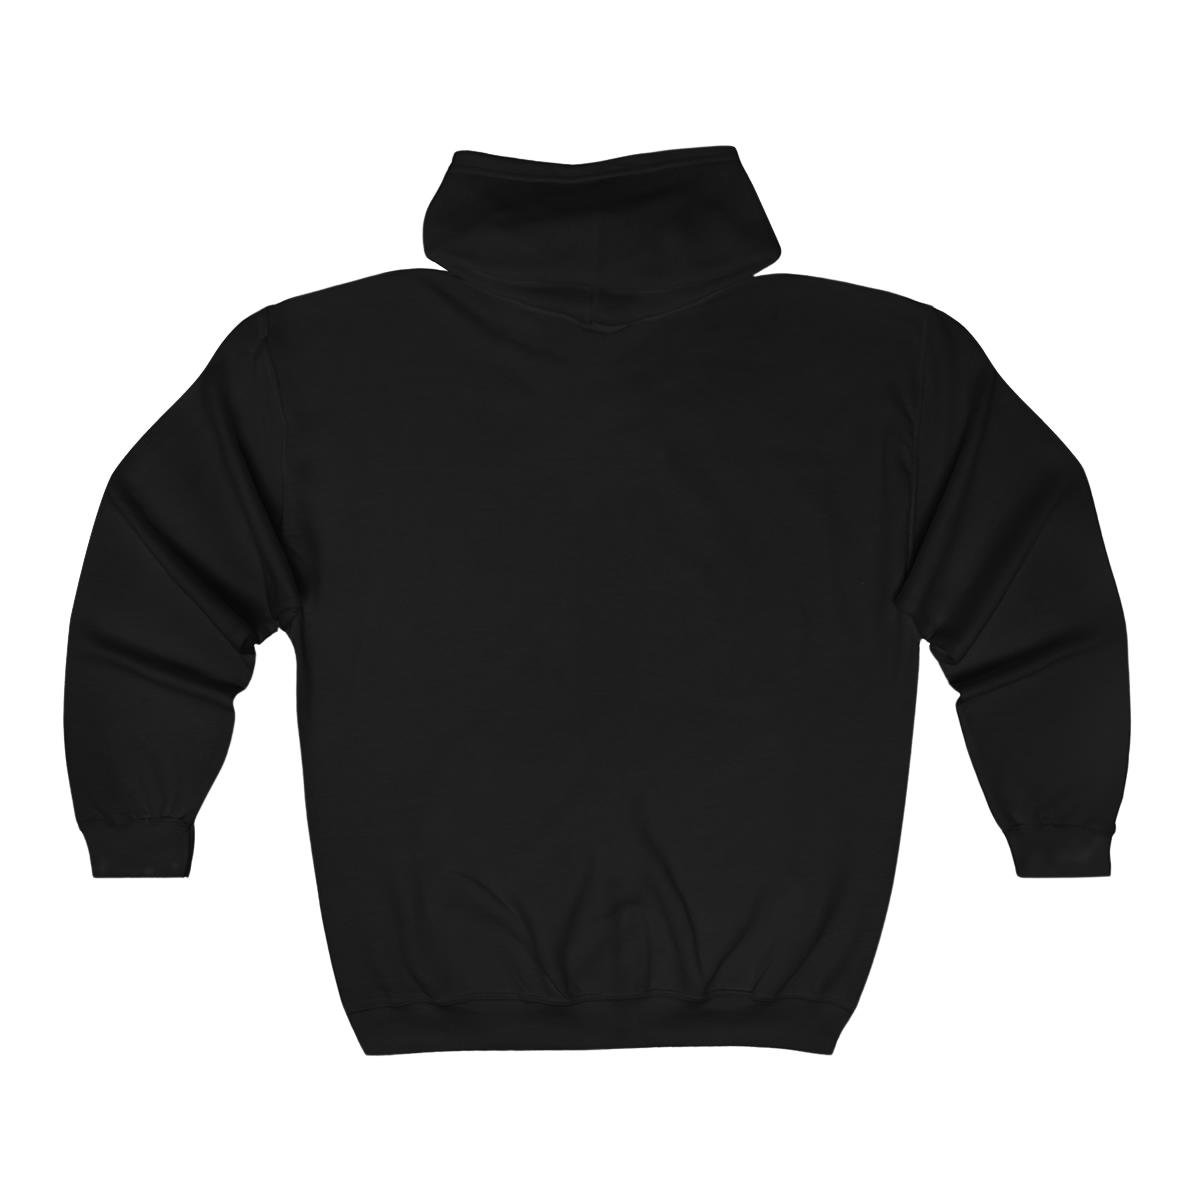 Armath Sargon – Space Full Zip Hooded Sweatshirt